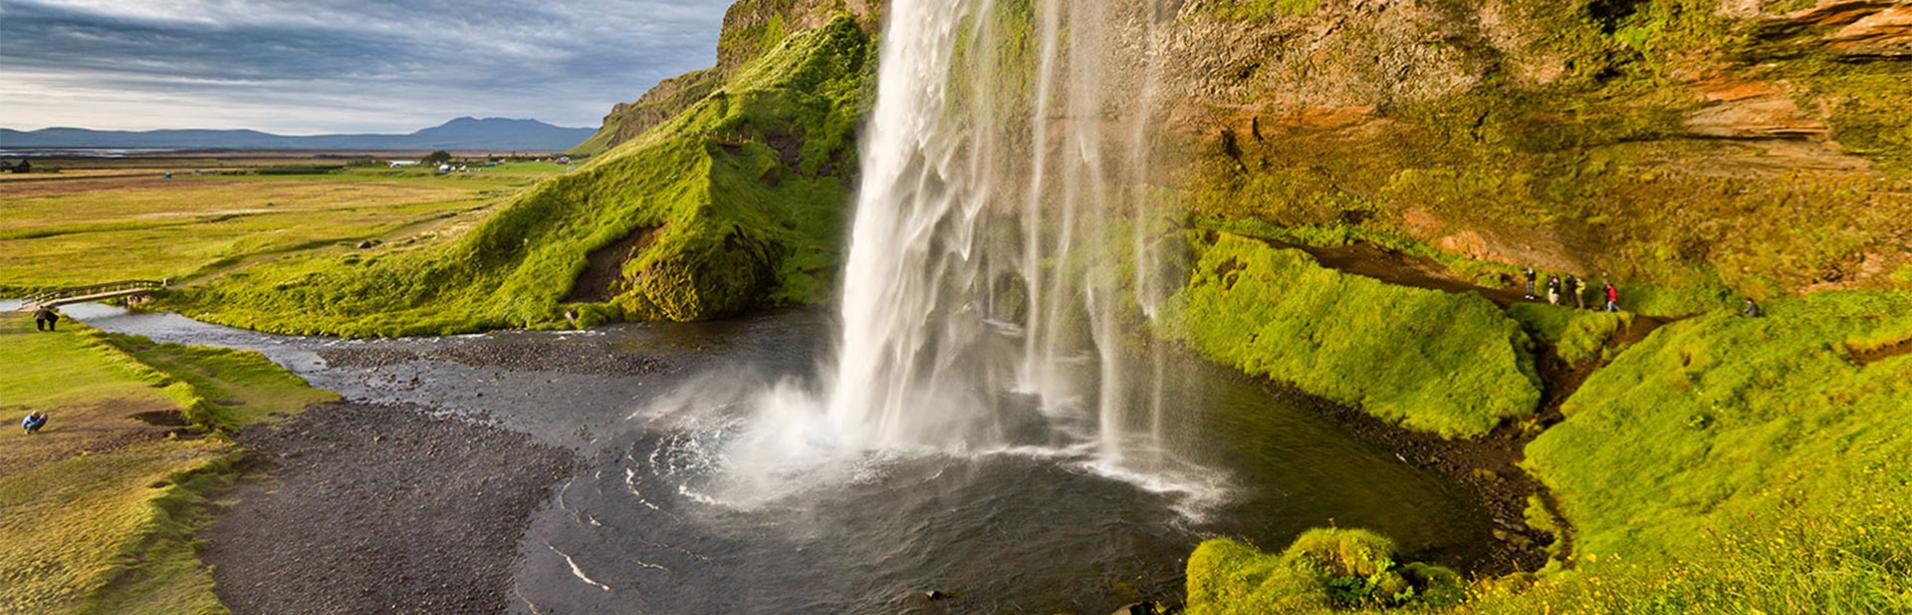 vattenfall, seljalandsfoss, sydkusten, island